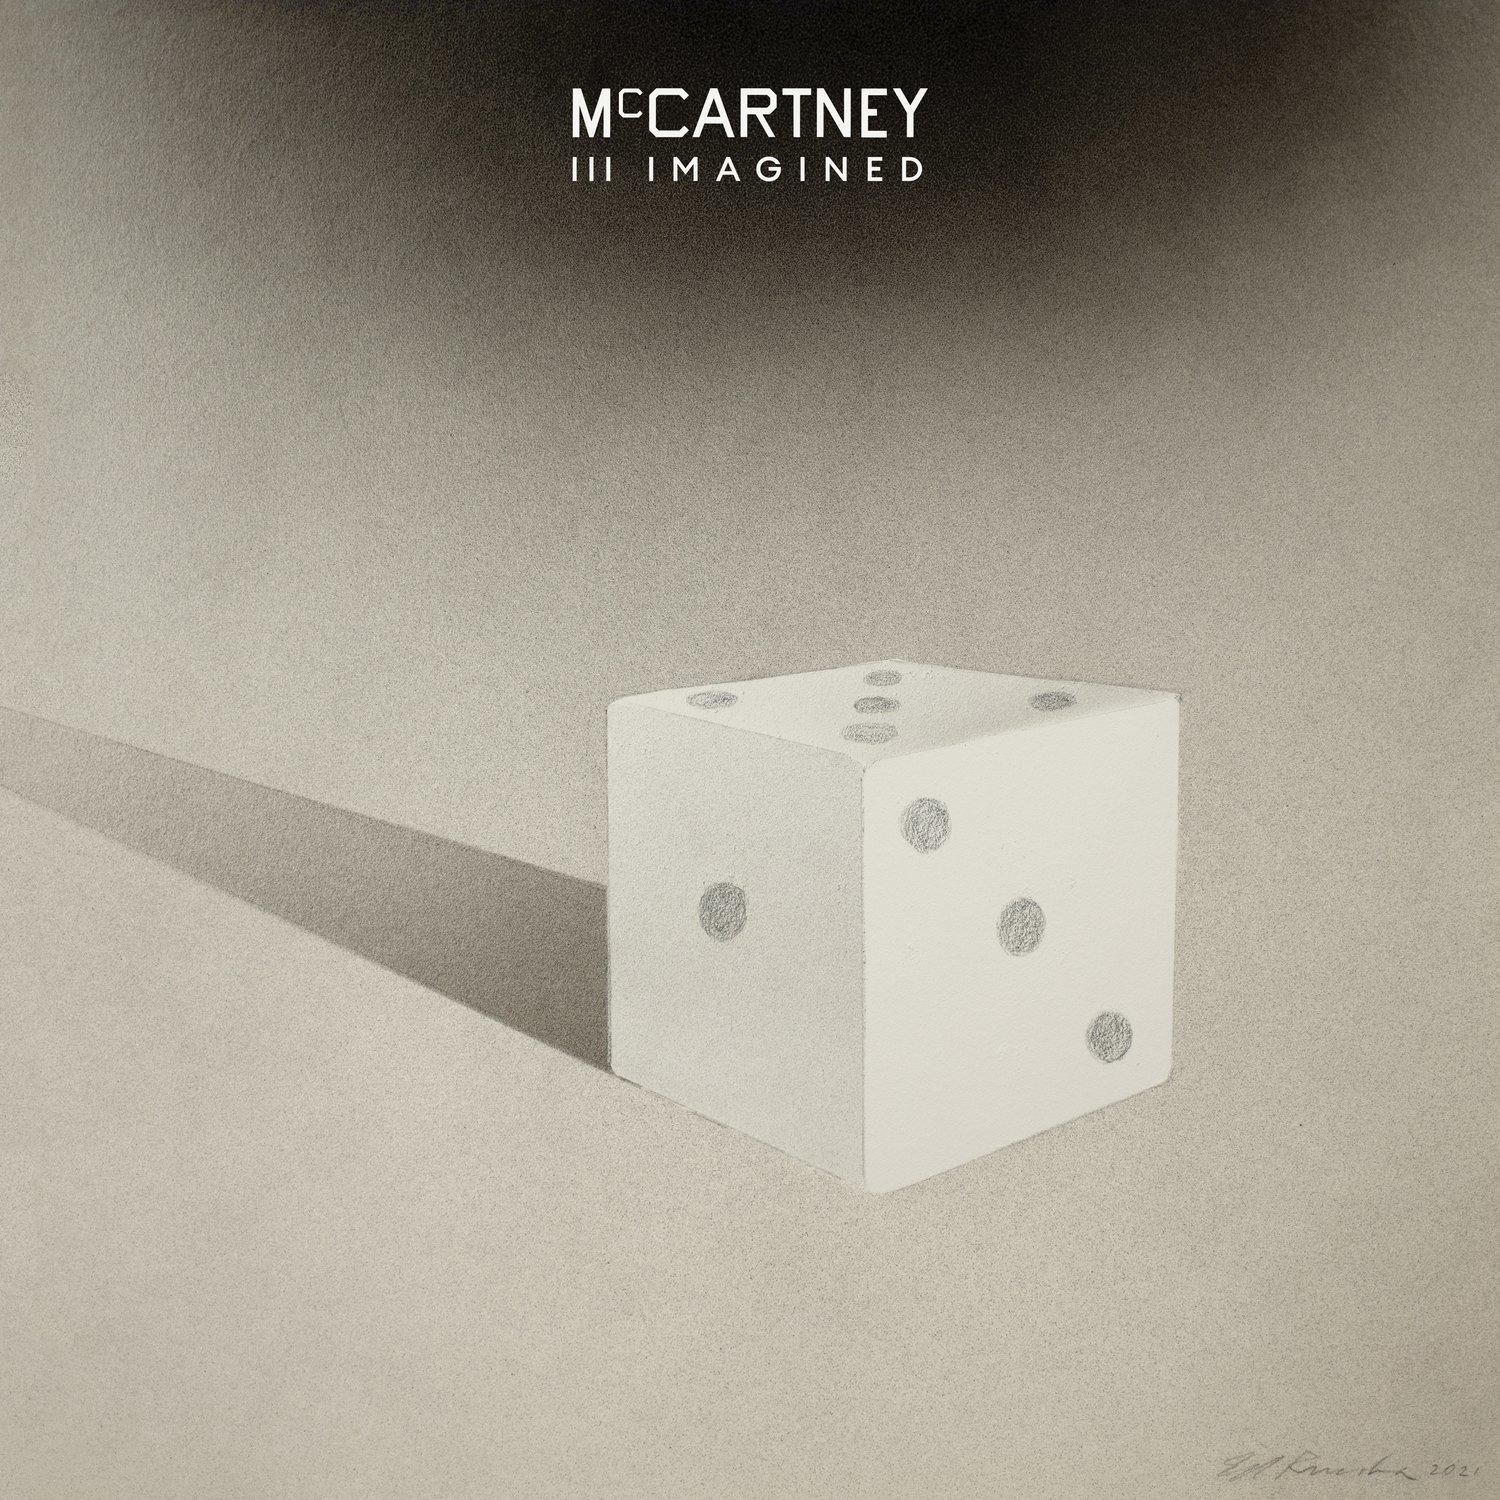 Paul McCartney Imagined - - (2LP) III (Vinyl) McCartney